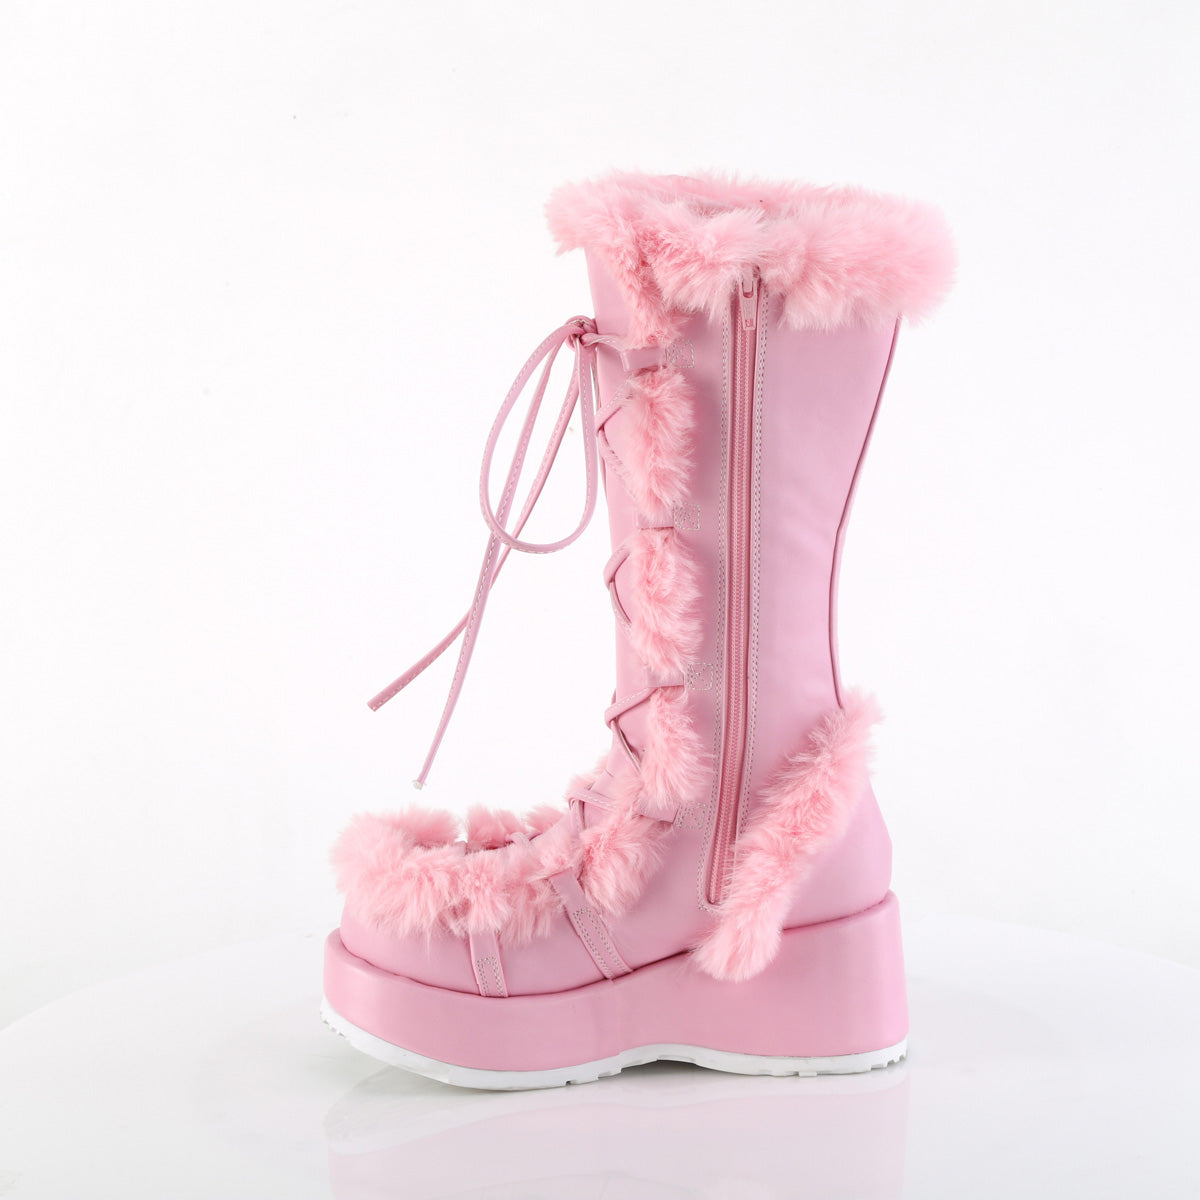 CUBBY-311 Demonia B Pink Vegan Leather Women's Mid-Calf & Knee High Boots [Demonia Cult Alternative Footwear]